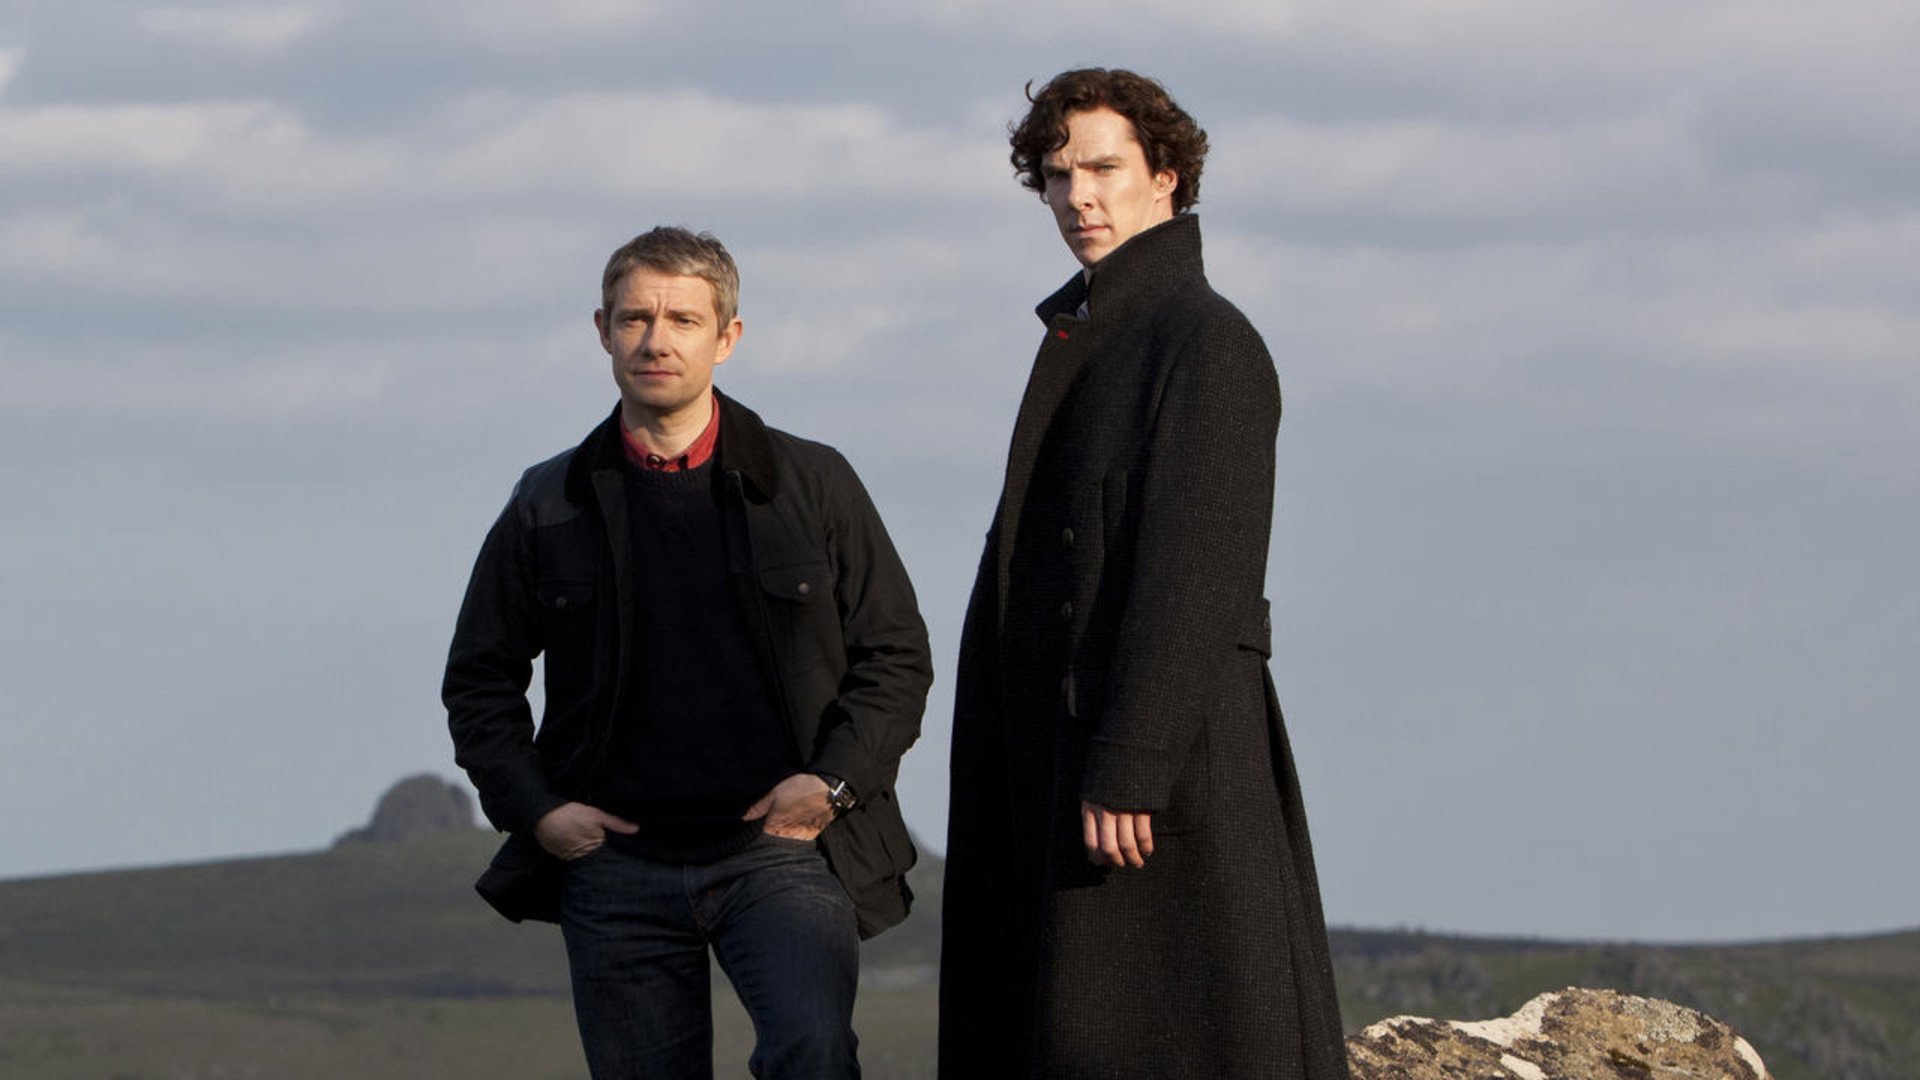 Watch Sherlock Season 2 Episode 2 Online - Stream Full Episodes